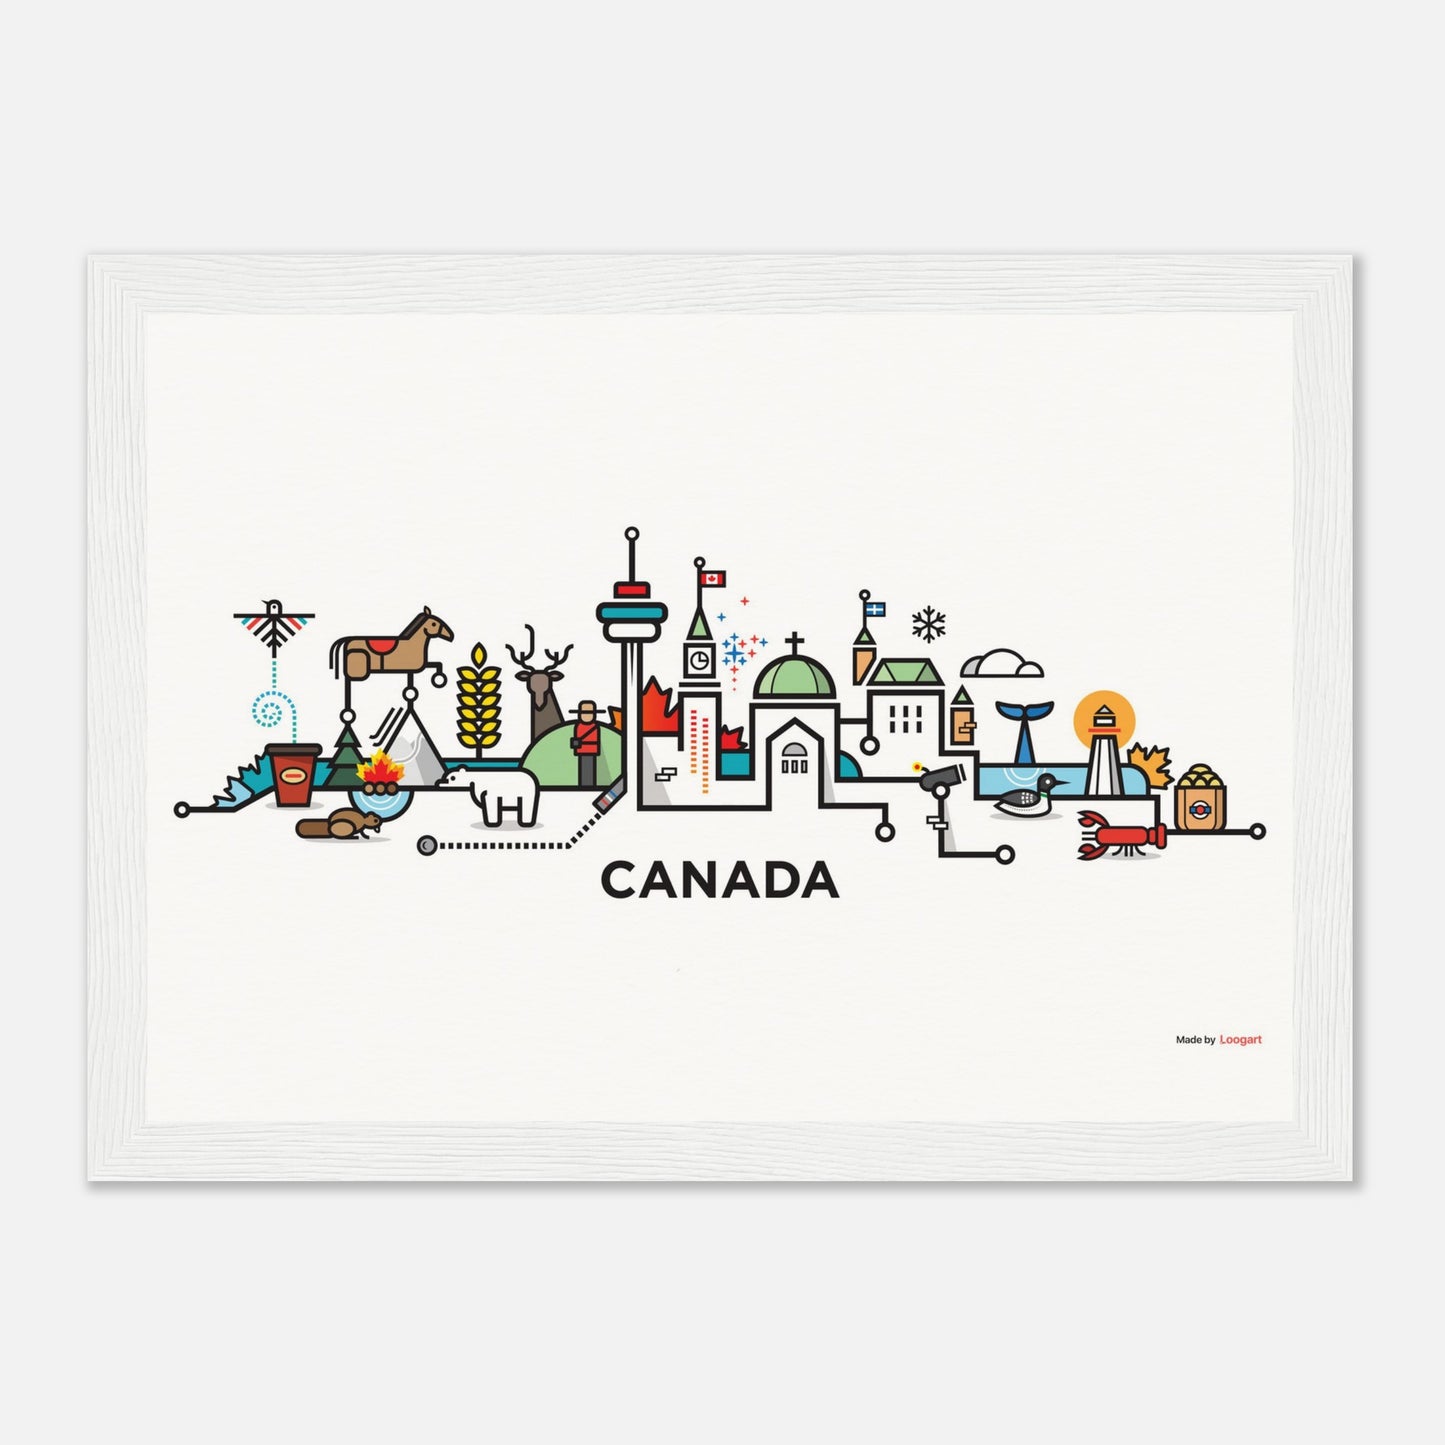 Canada CityLine by Loogart